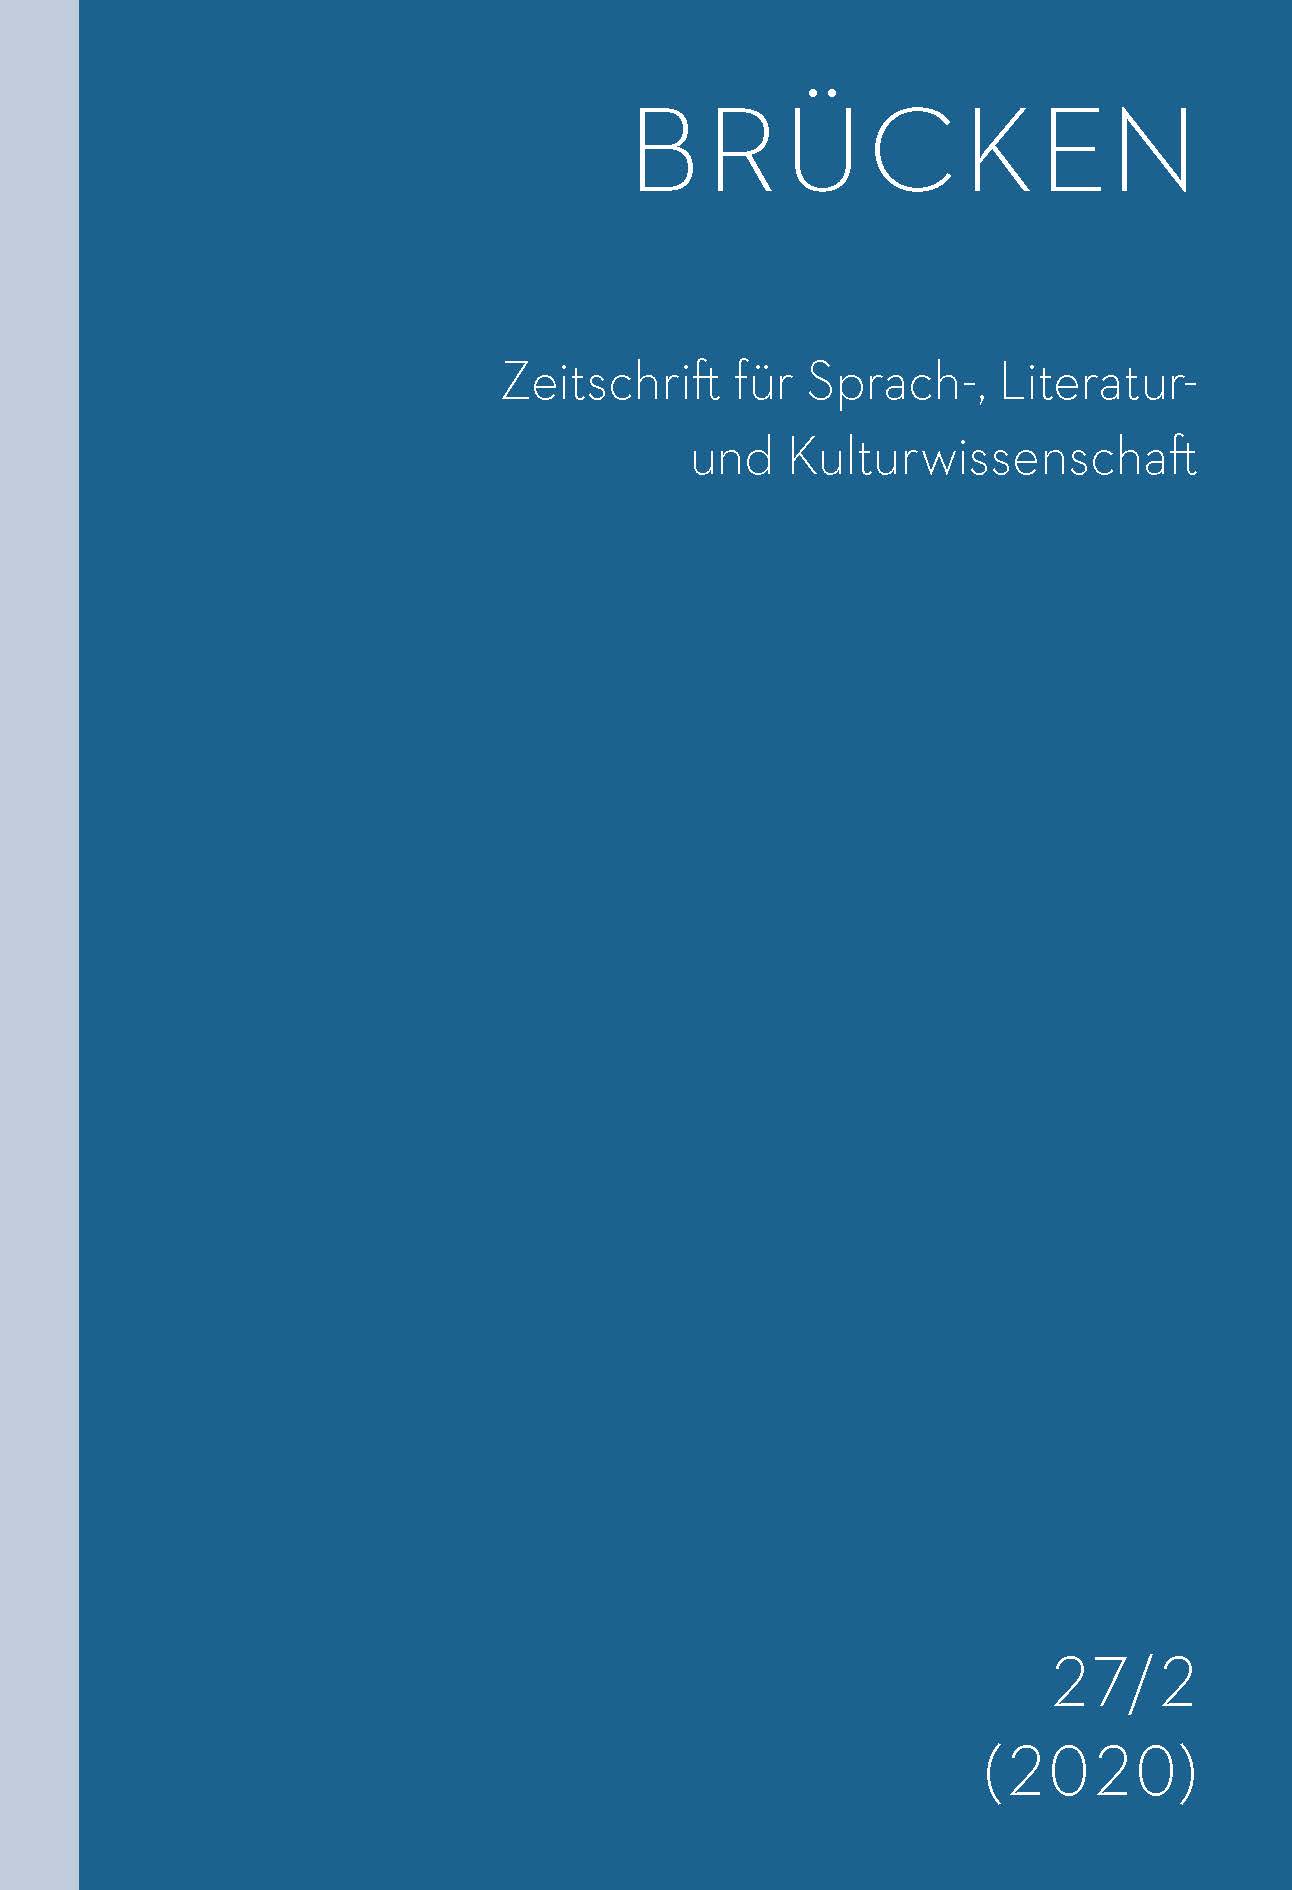 Brücken: Journal for Language, Literature and Cultural Studies